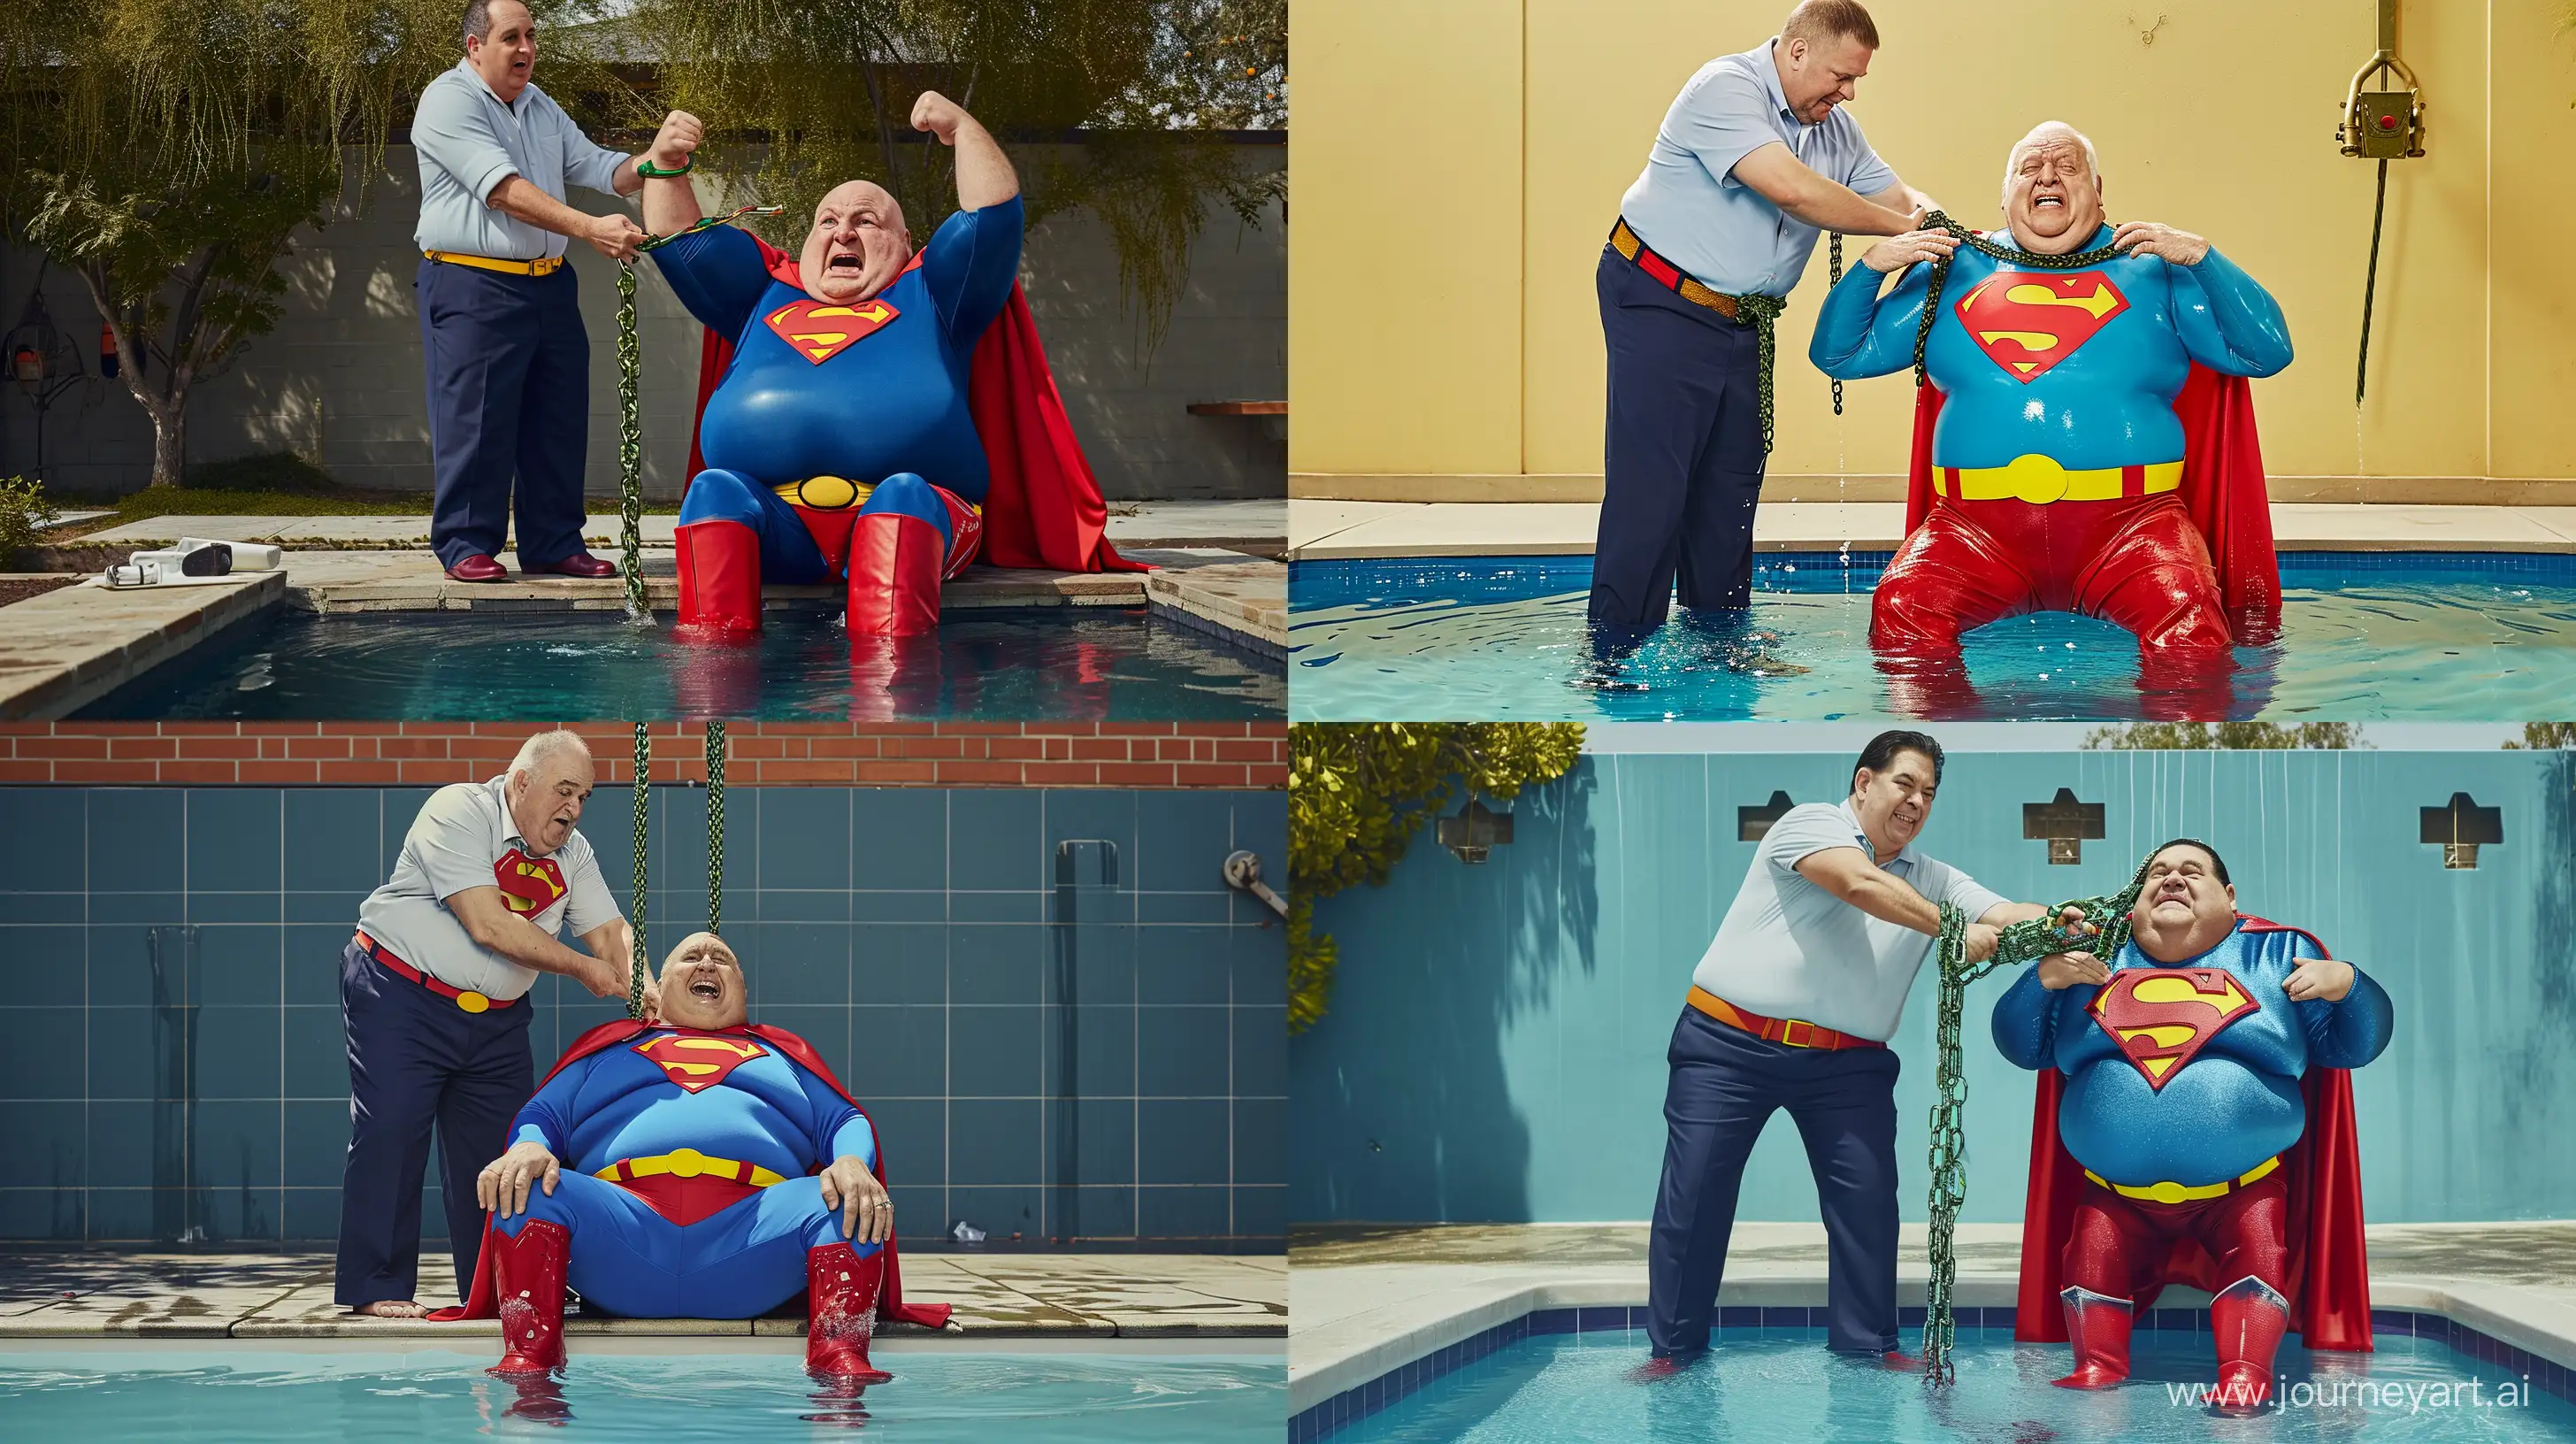 Fearful-Superman-in-Unusual-Bondage-Scene